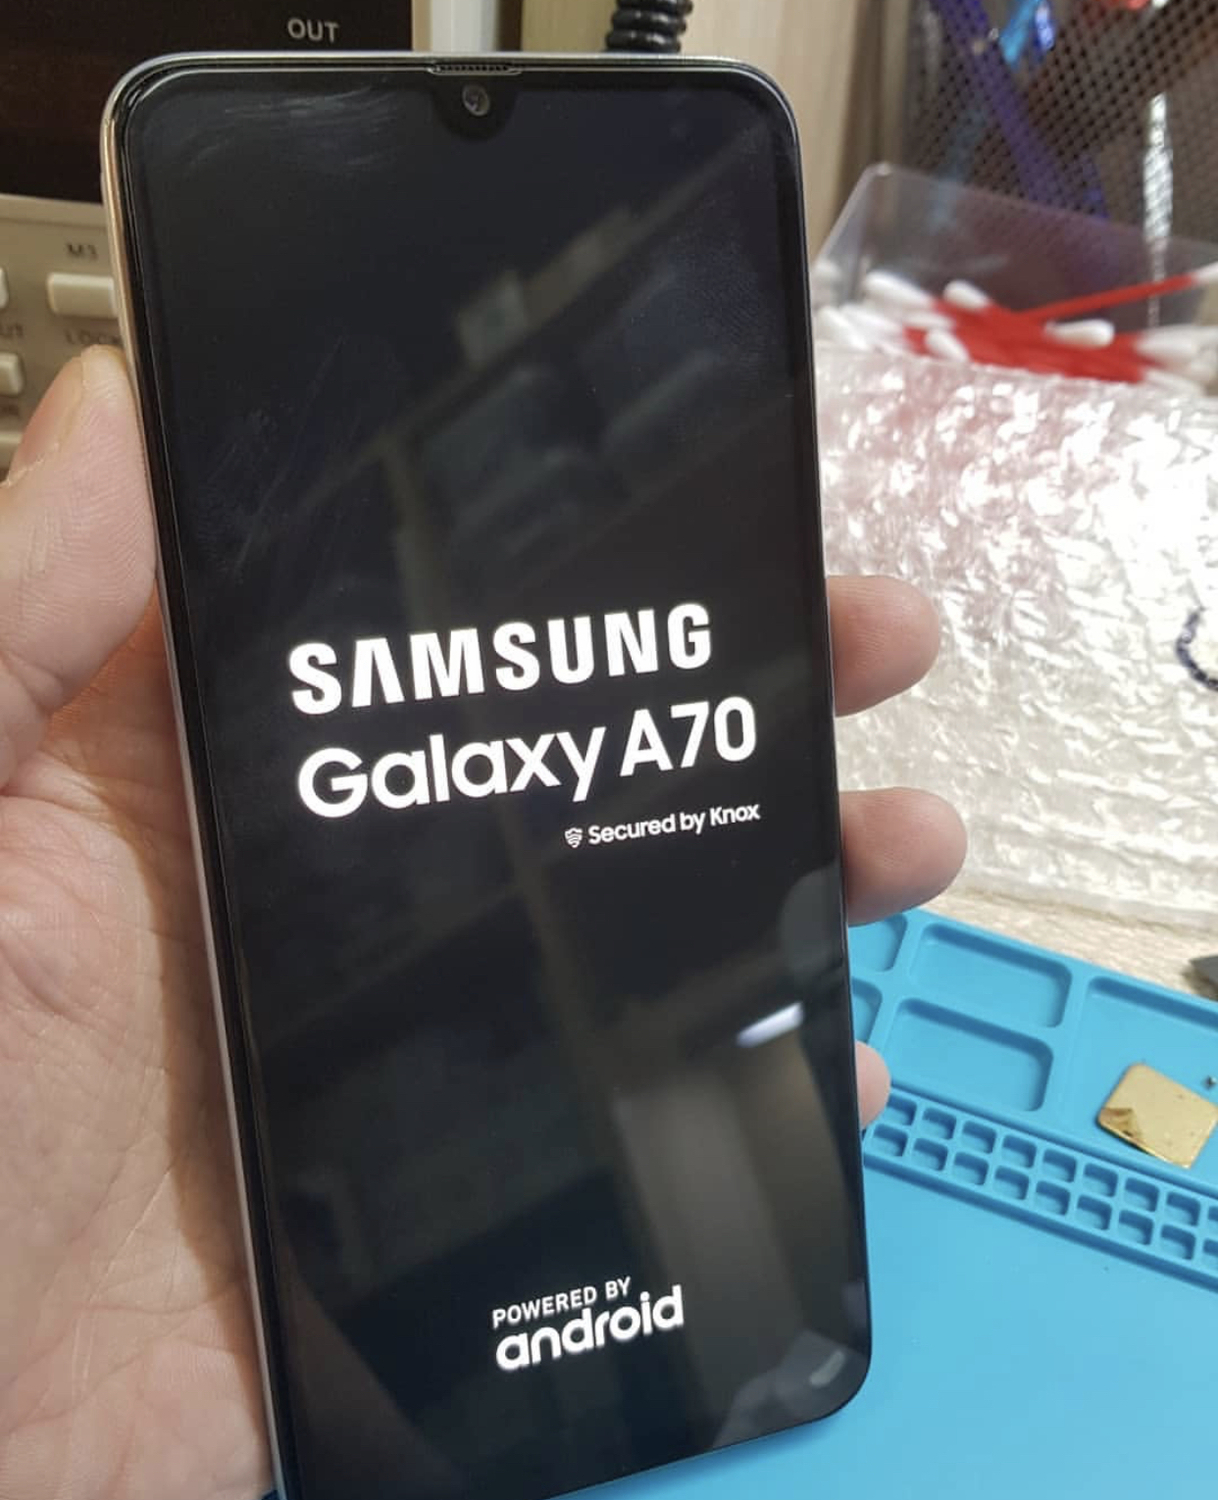 Samsung A52 Цена Связной